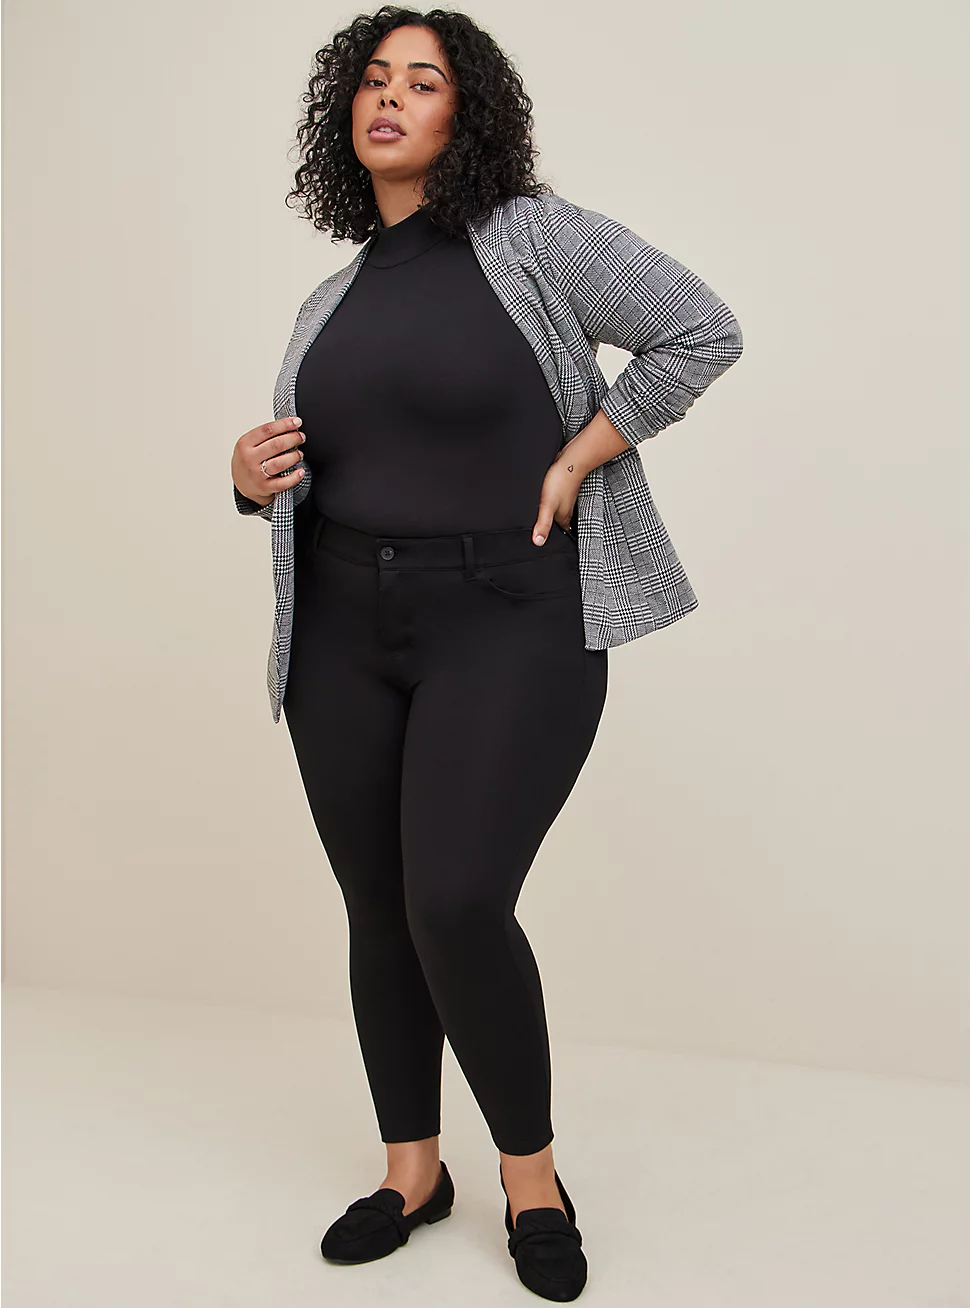 8 Best Plus-Size Black Work Pants for Women 2022 | The Strategist